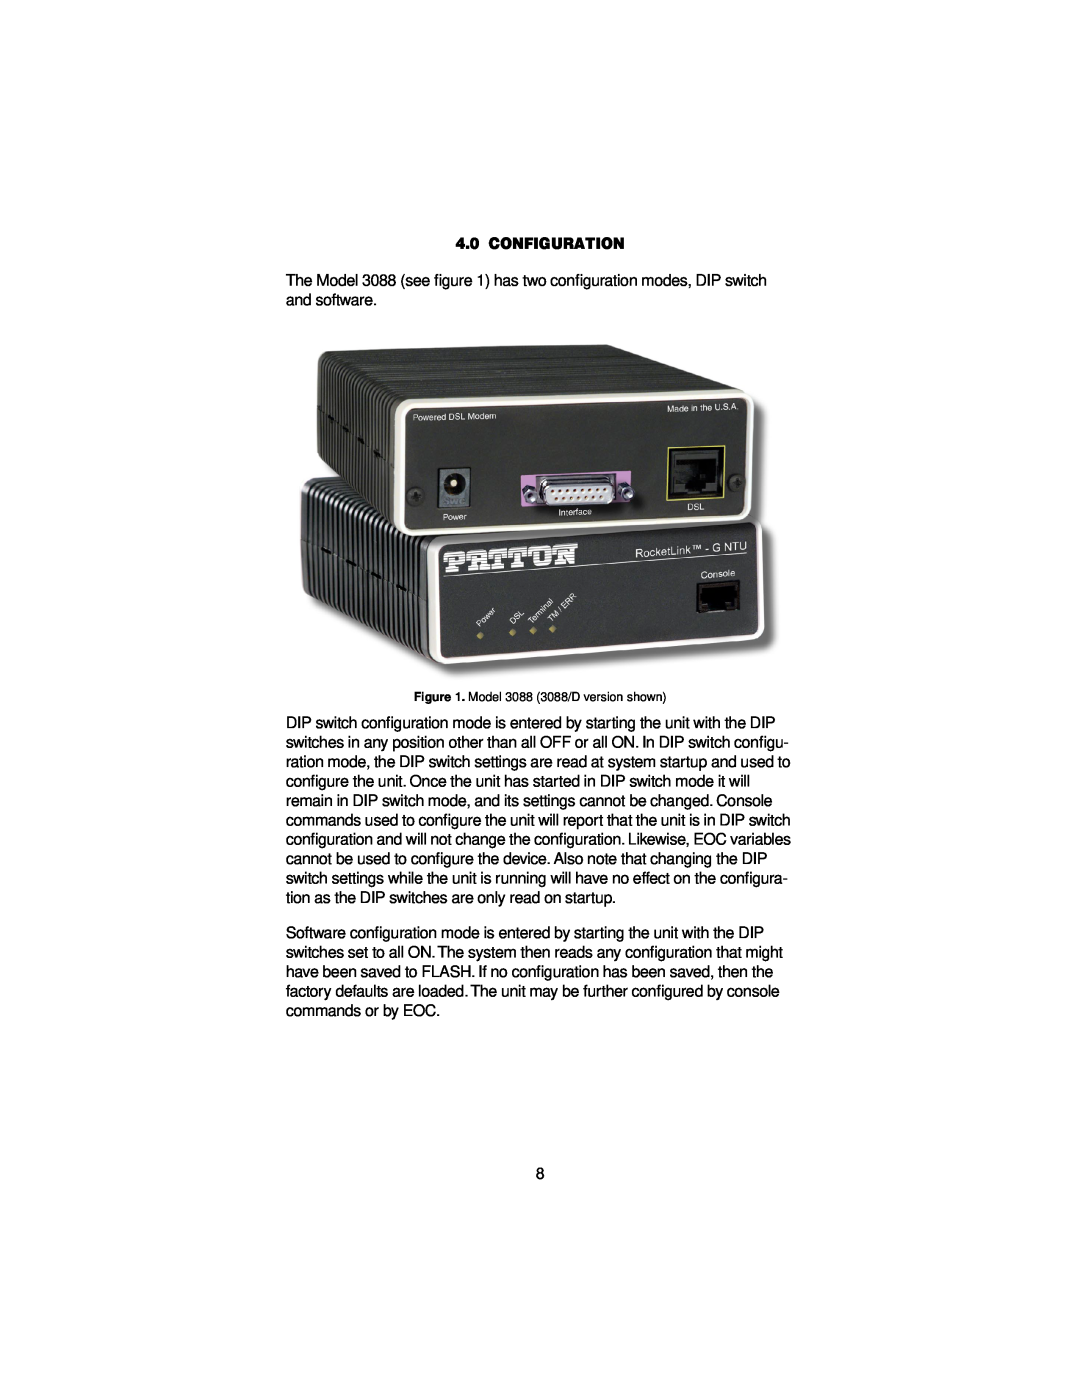 Patton electronic user manual Configuration, Model 3088 3088/D version shown 